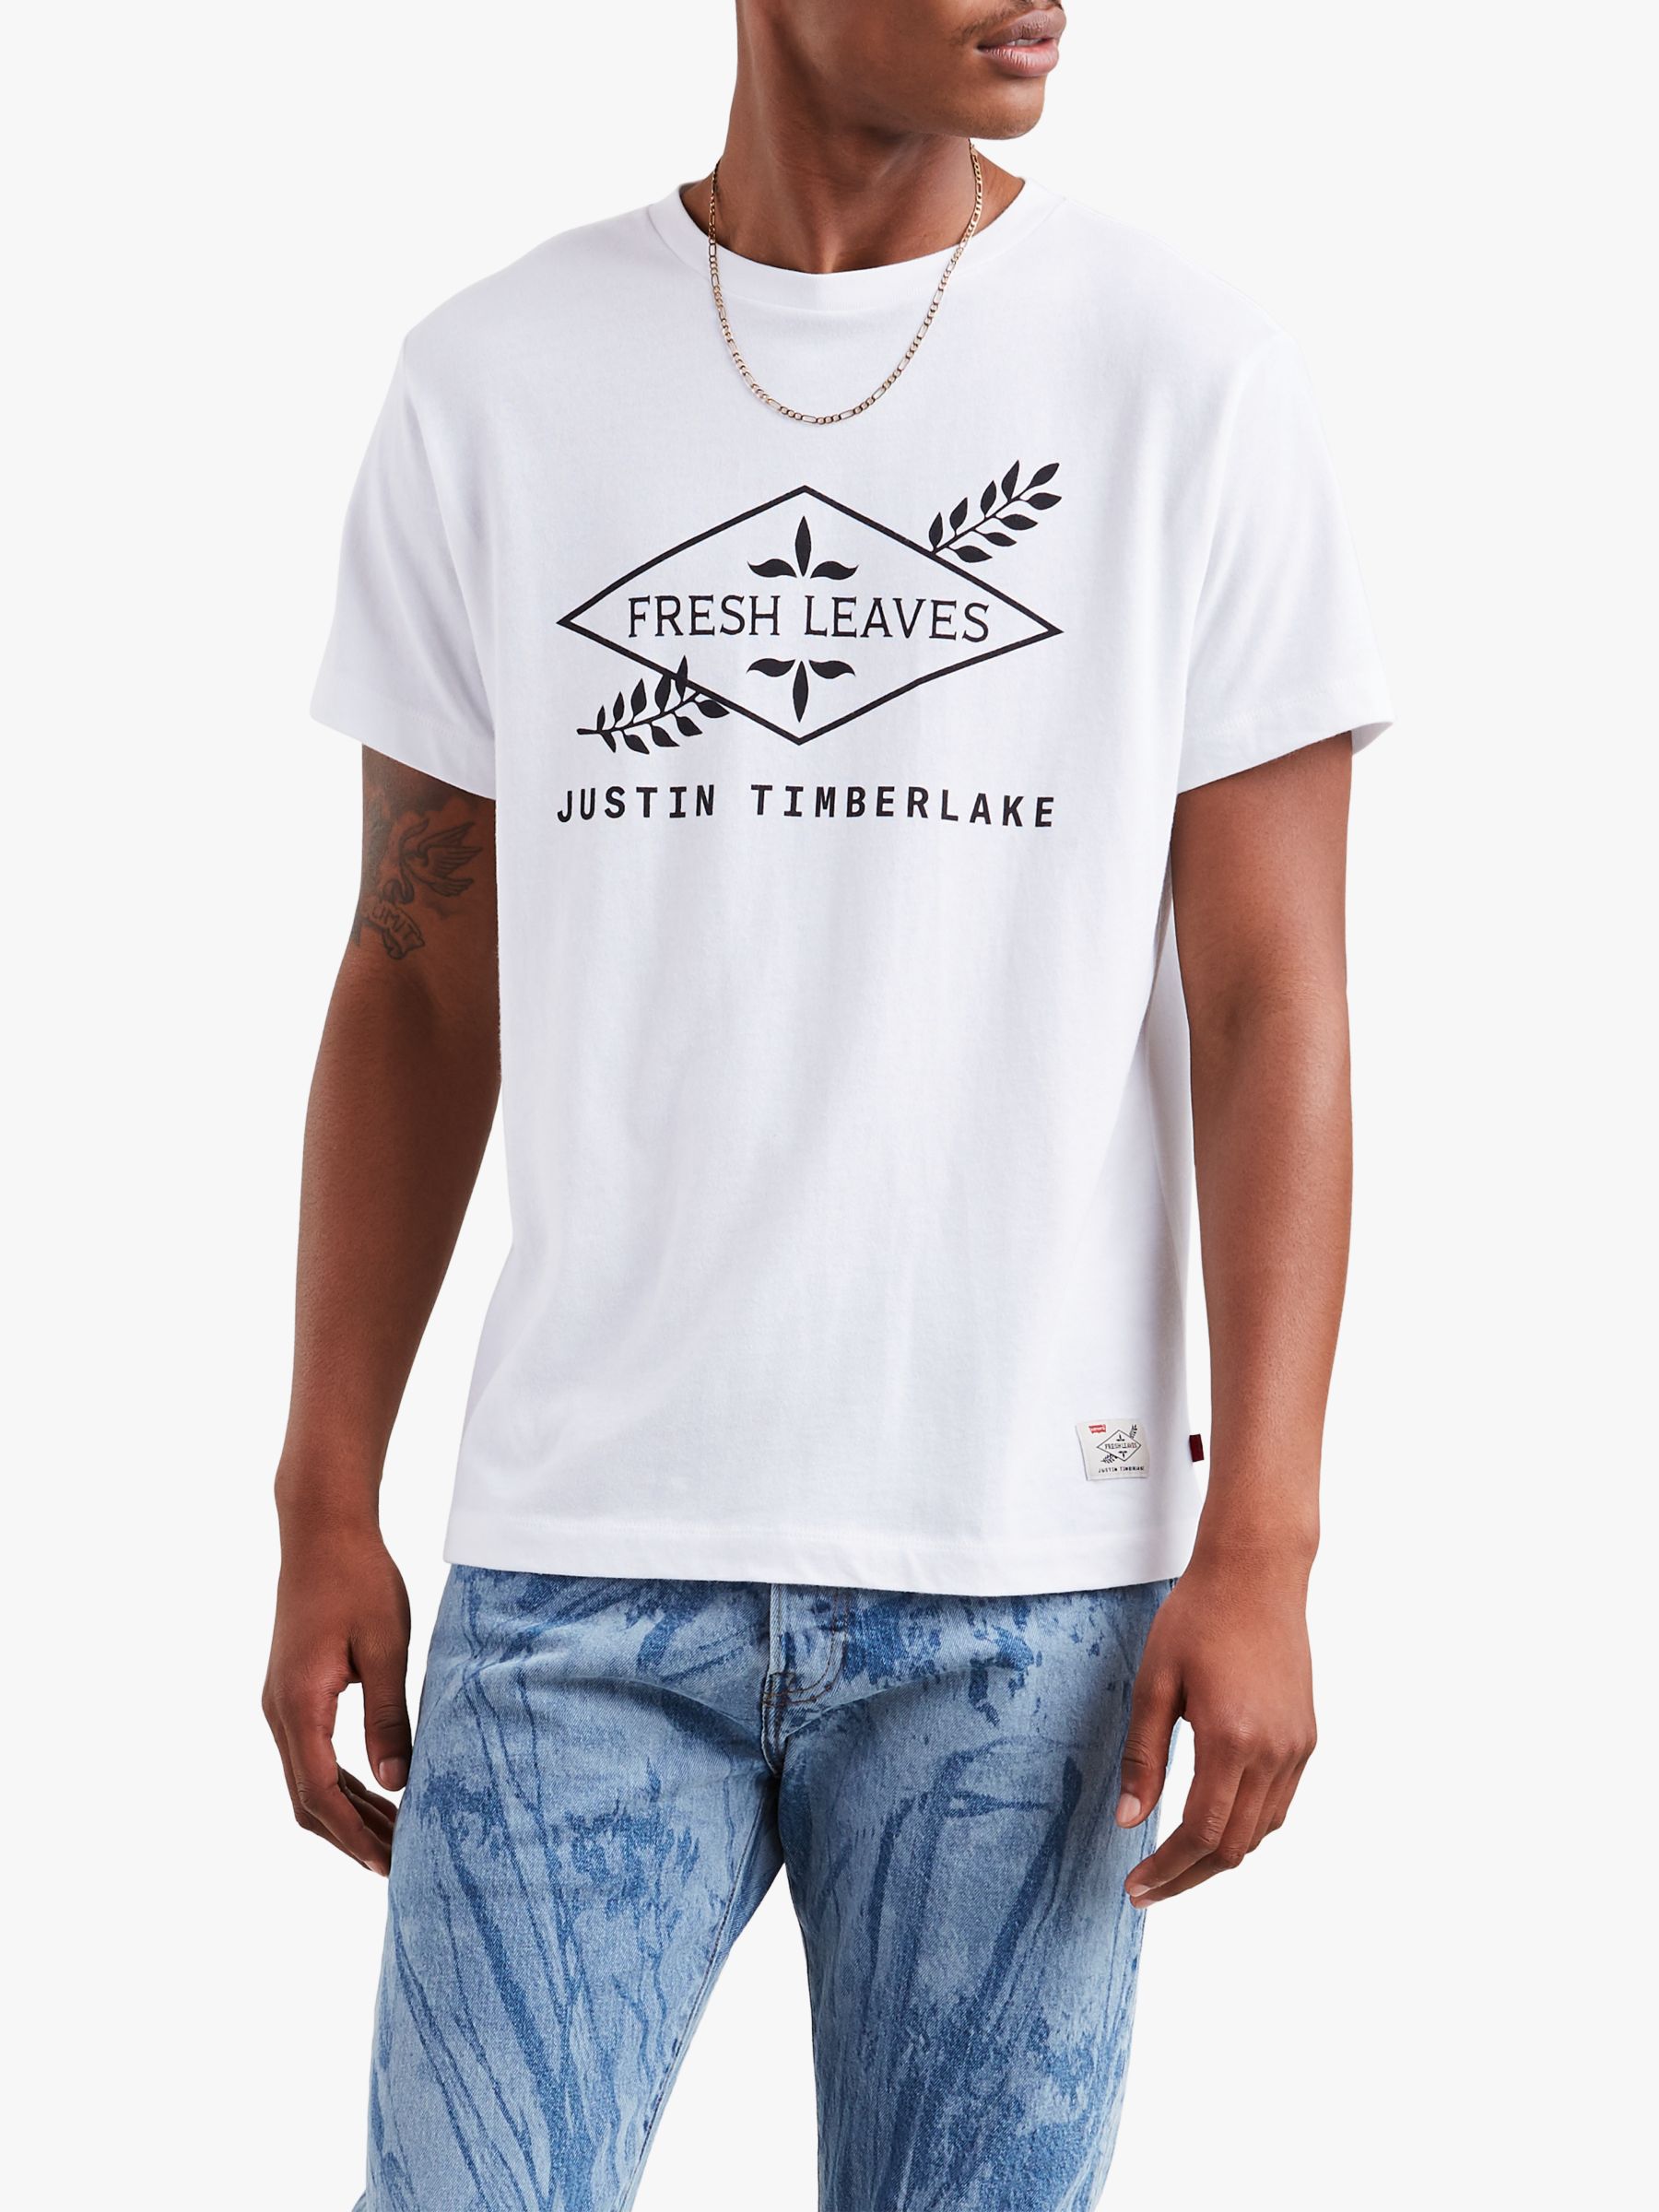 Levi's x Justin Timberlake Fresh Leaves Short Sleeve T-Shirt, White